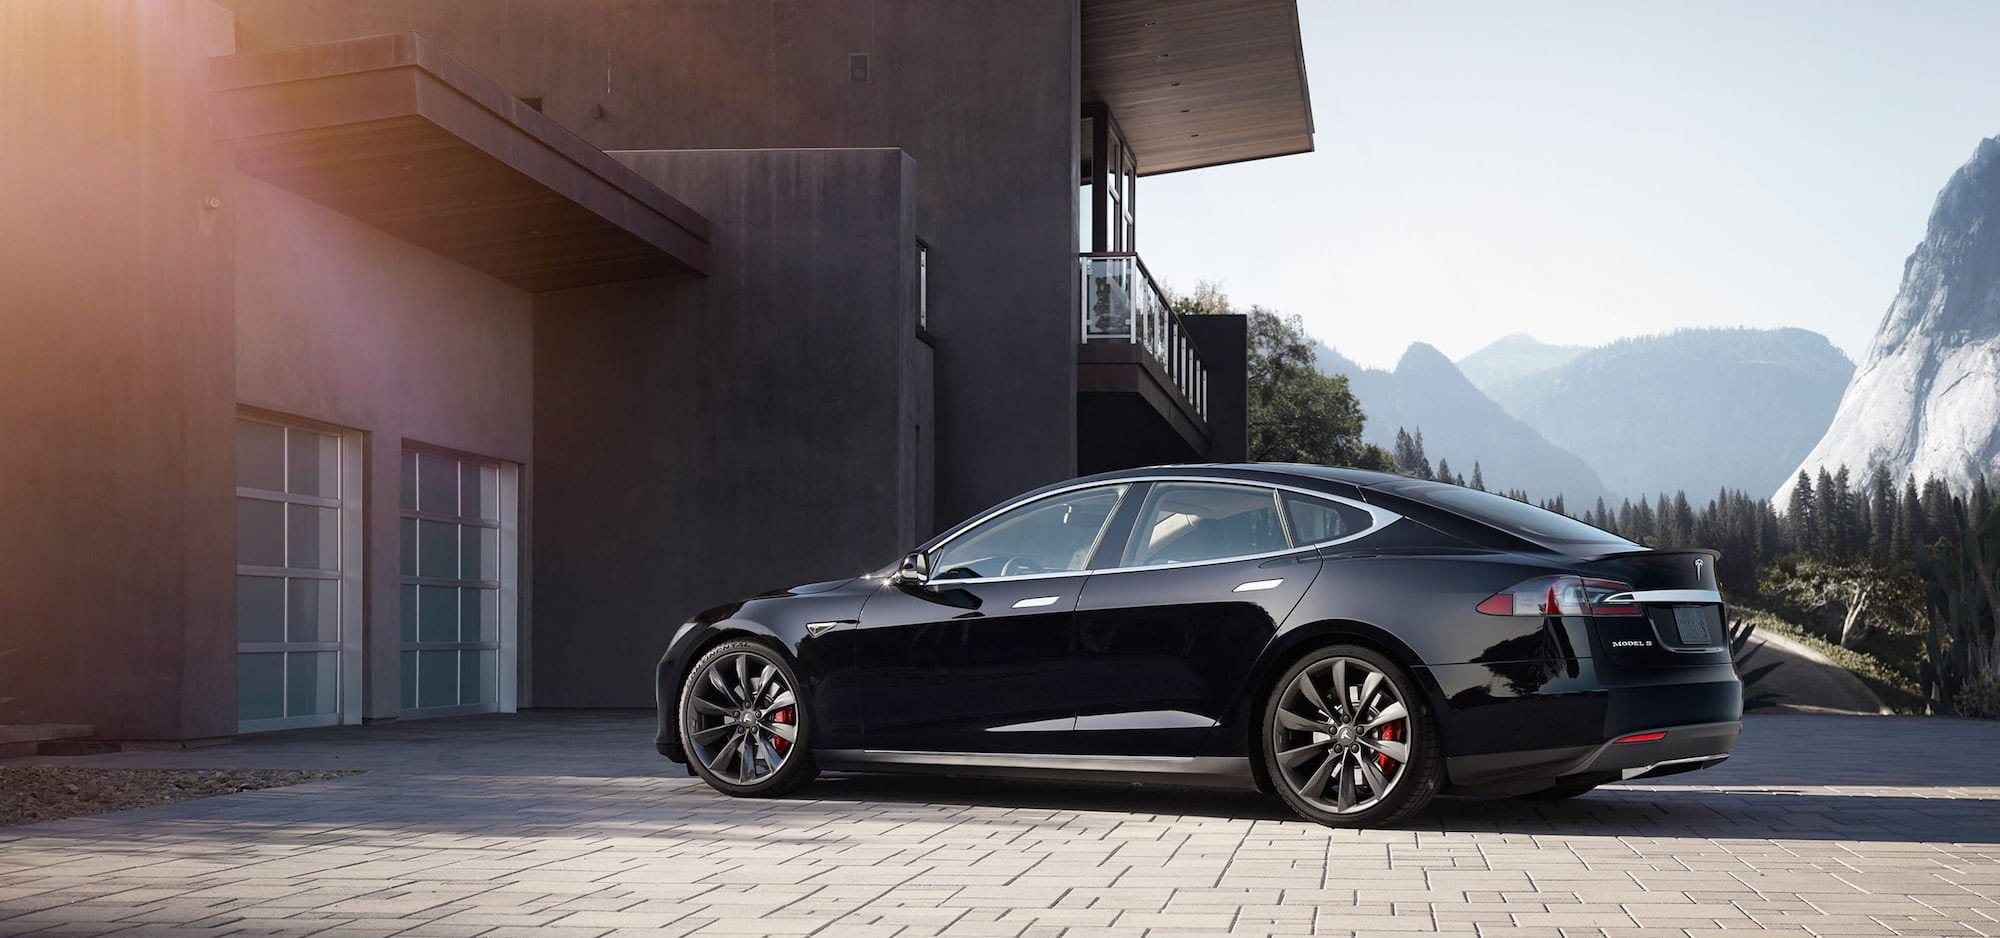 Tesla Introduces The Model S 100D The World’s Longest Ra